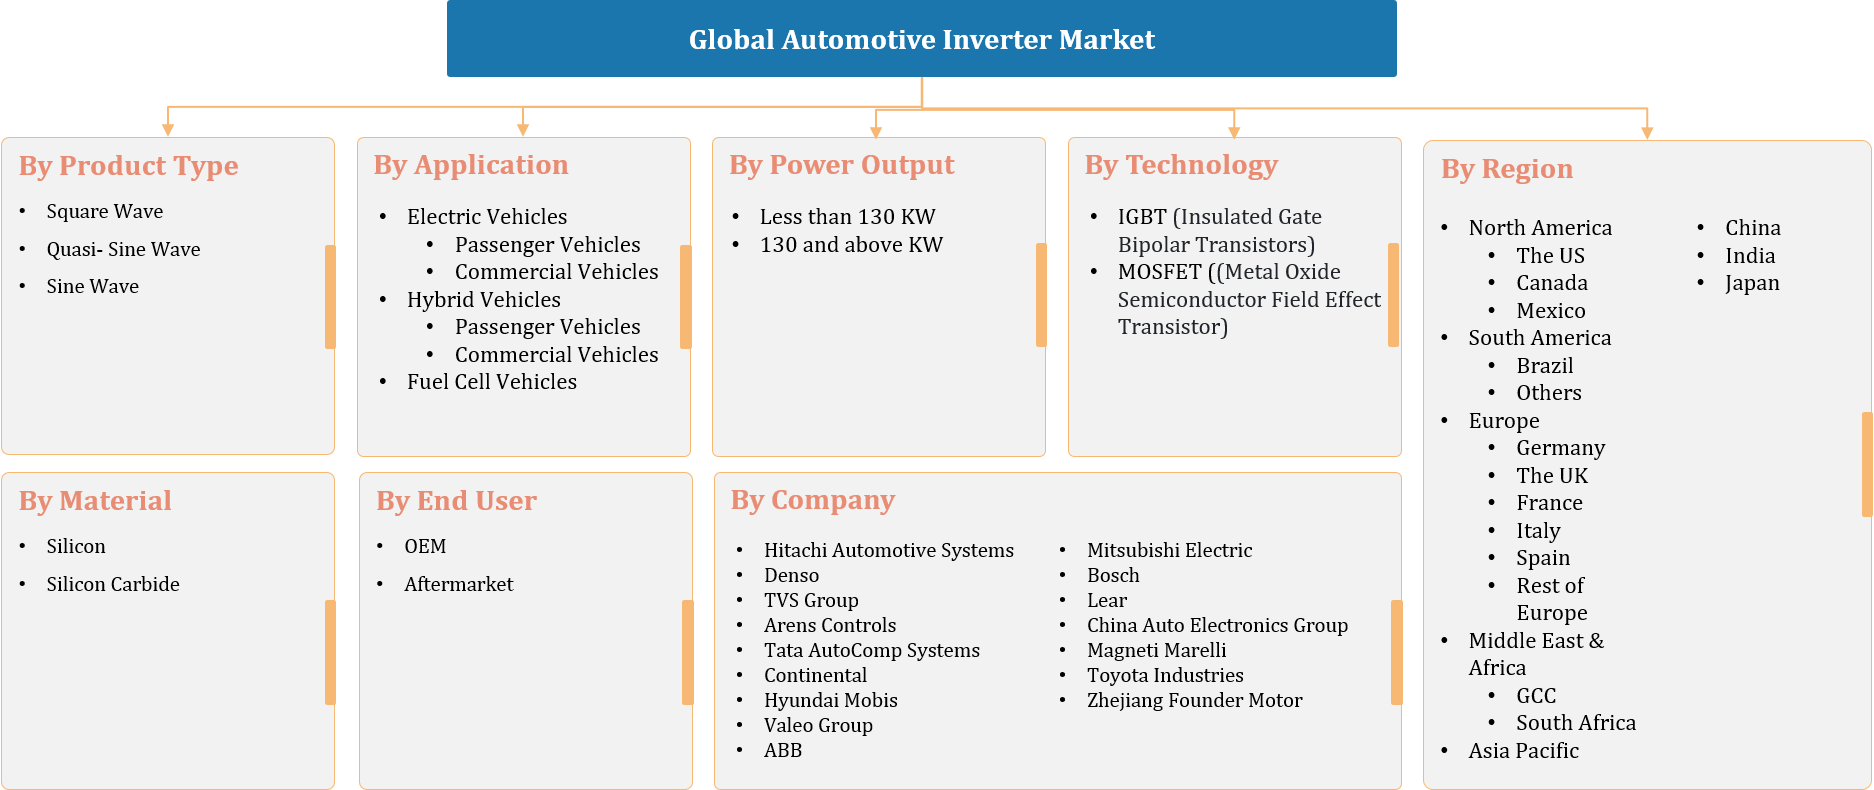 Global Automotive Inverter Market Segmentation